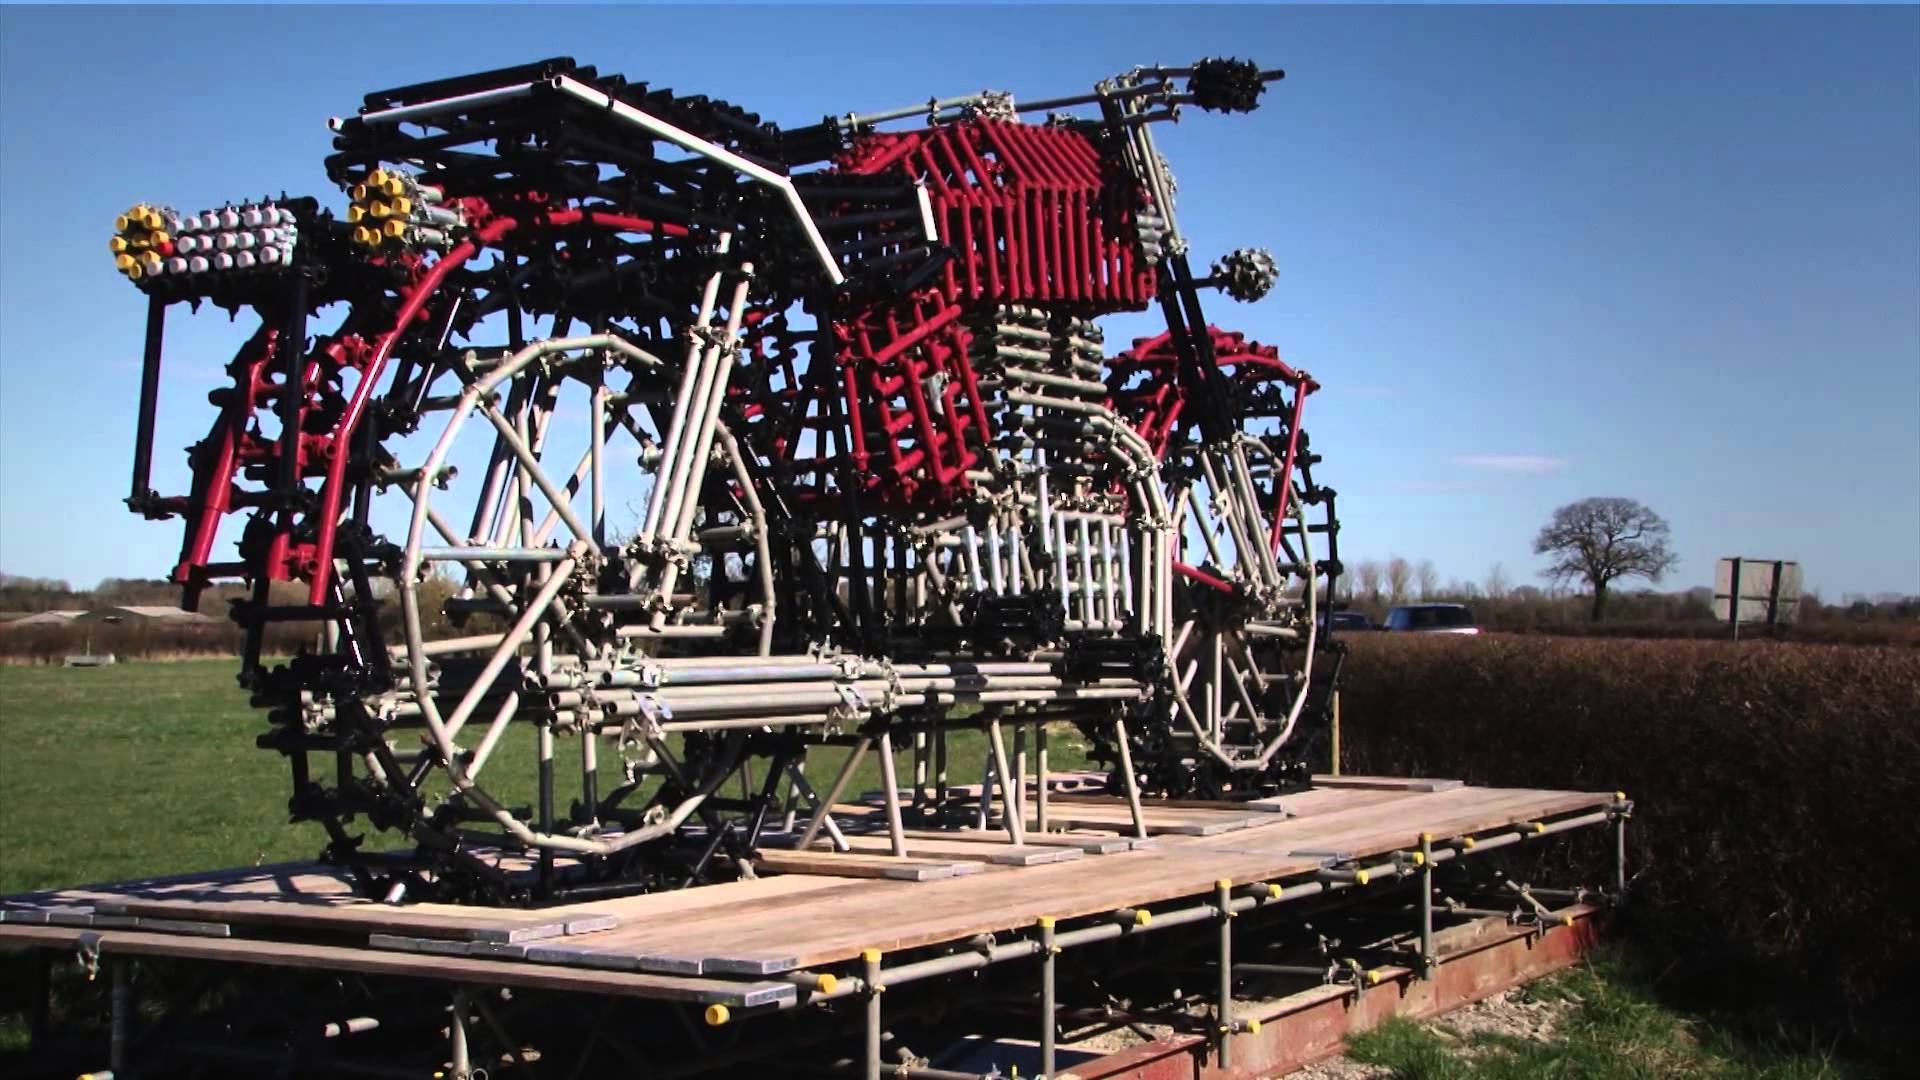 Photograph of the scaffold bike landmark in Calne